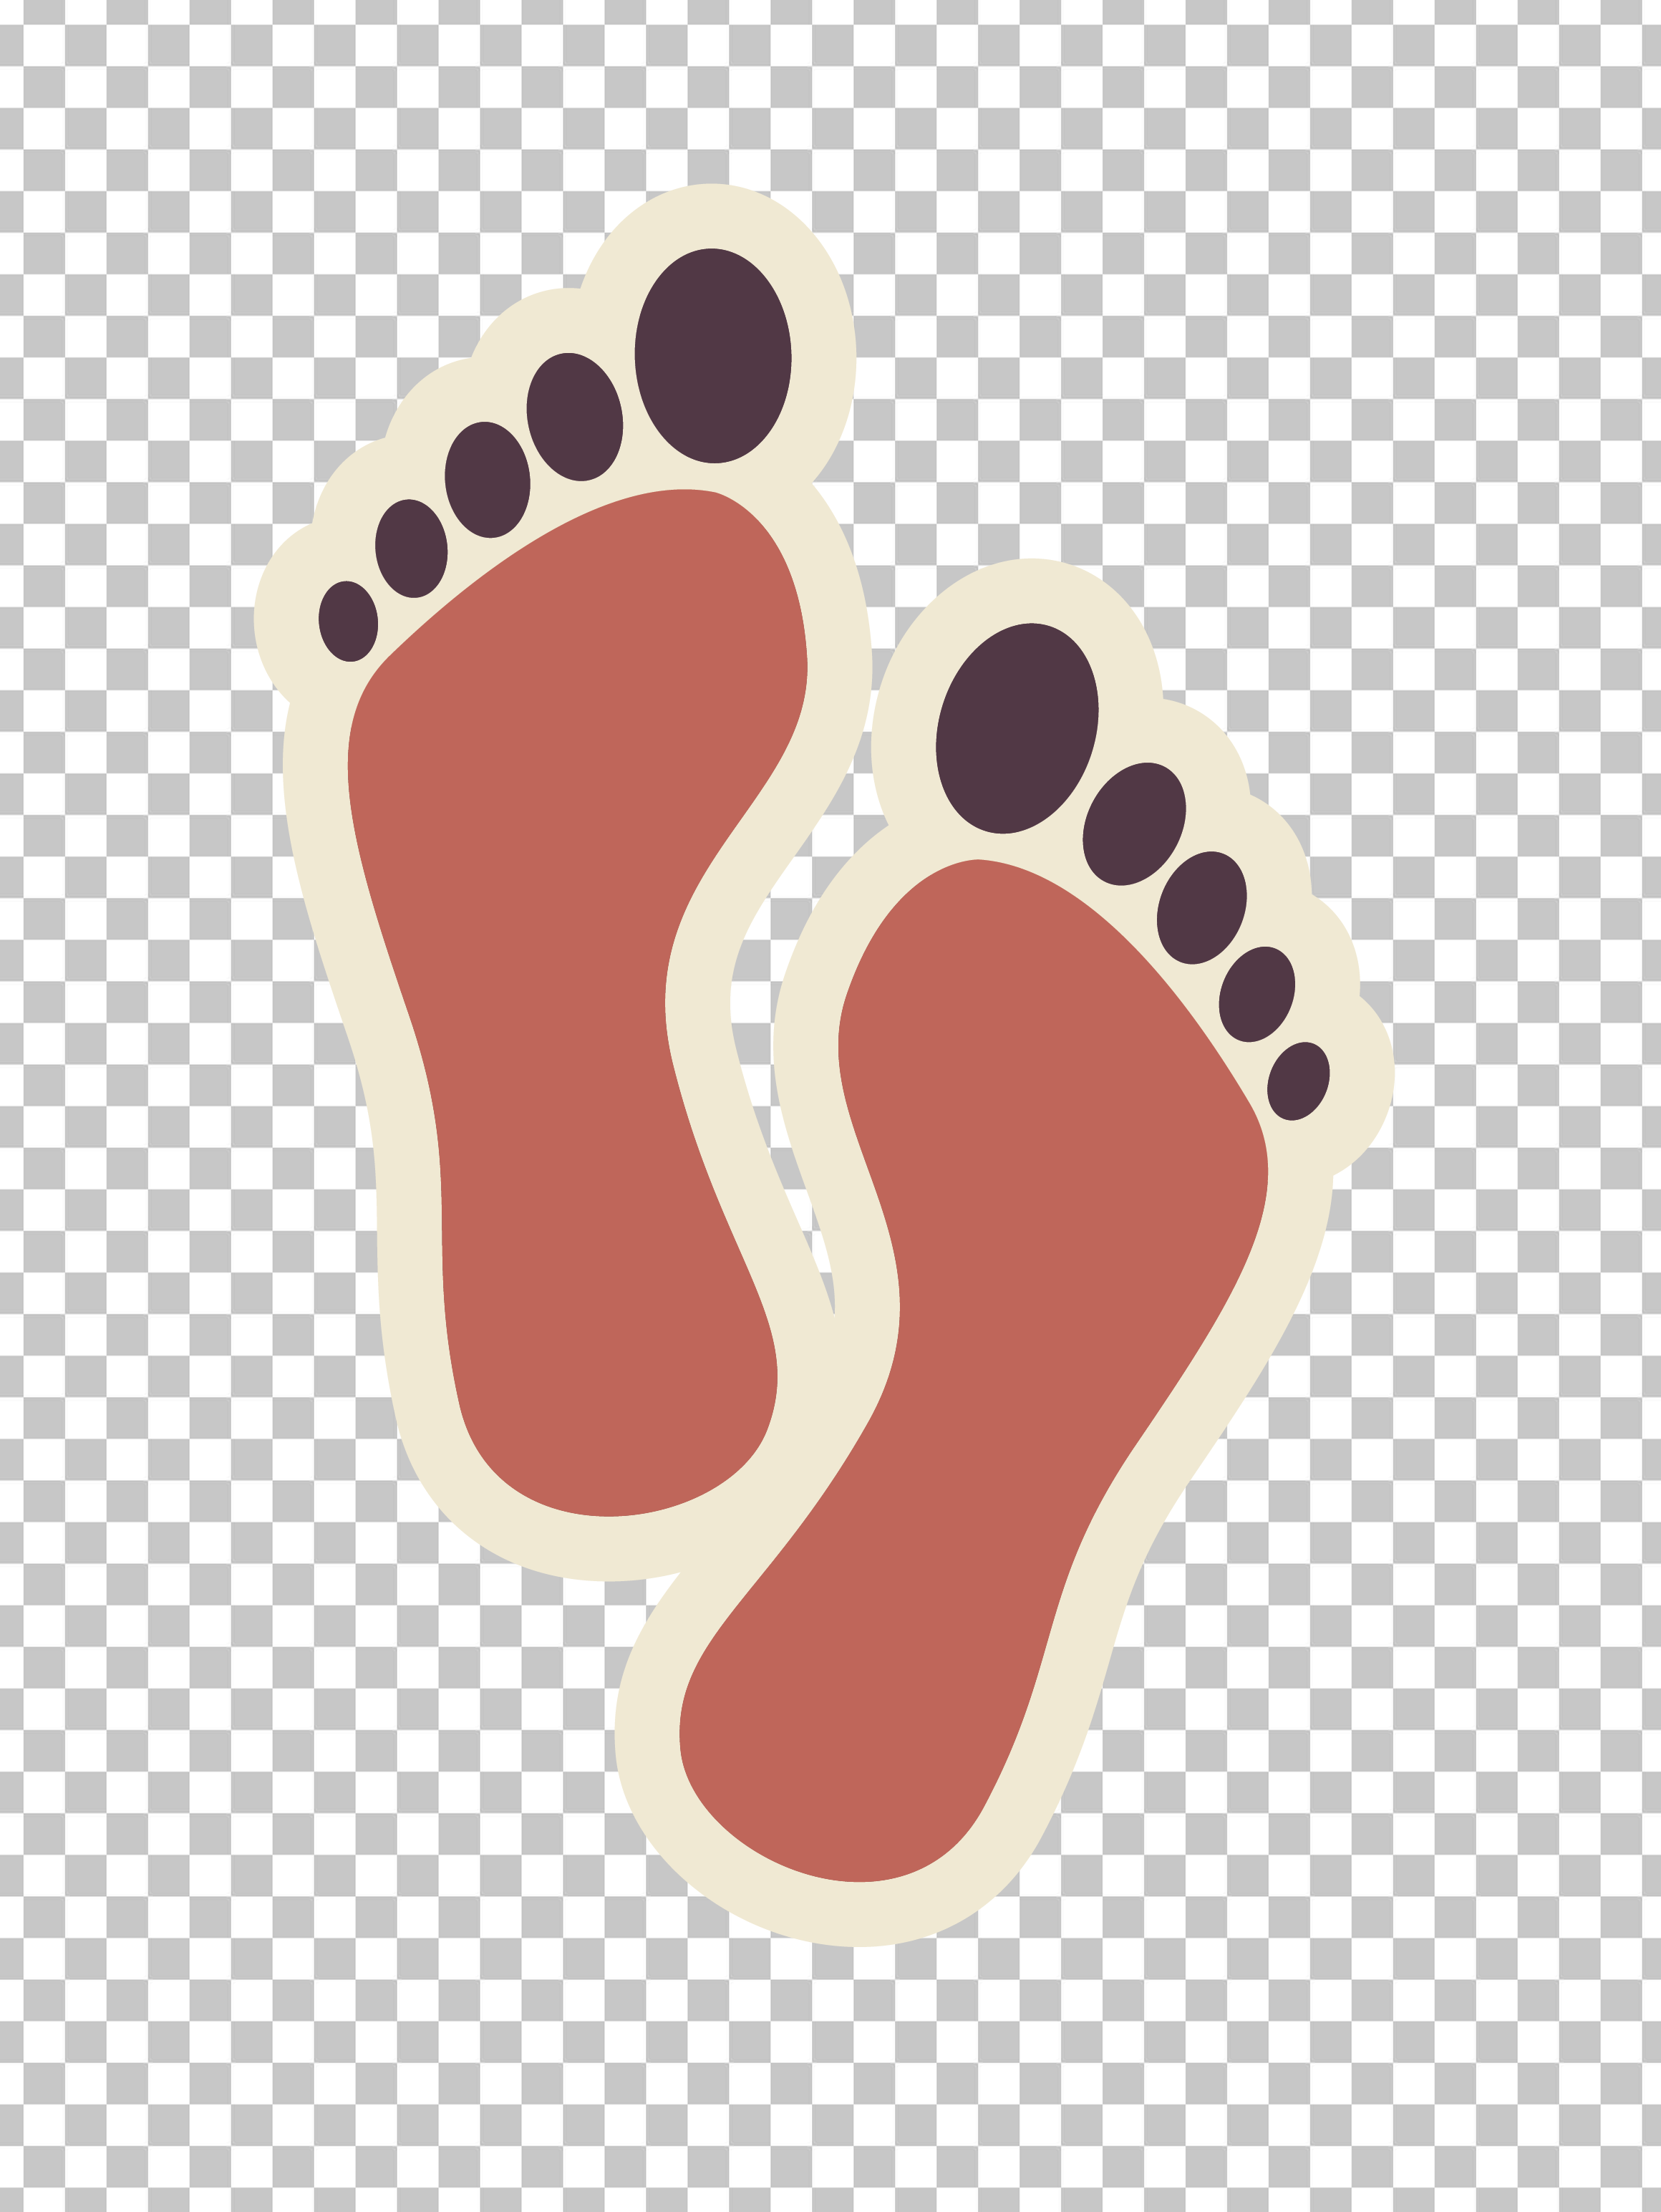 Footprints Sticker PNG Image